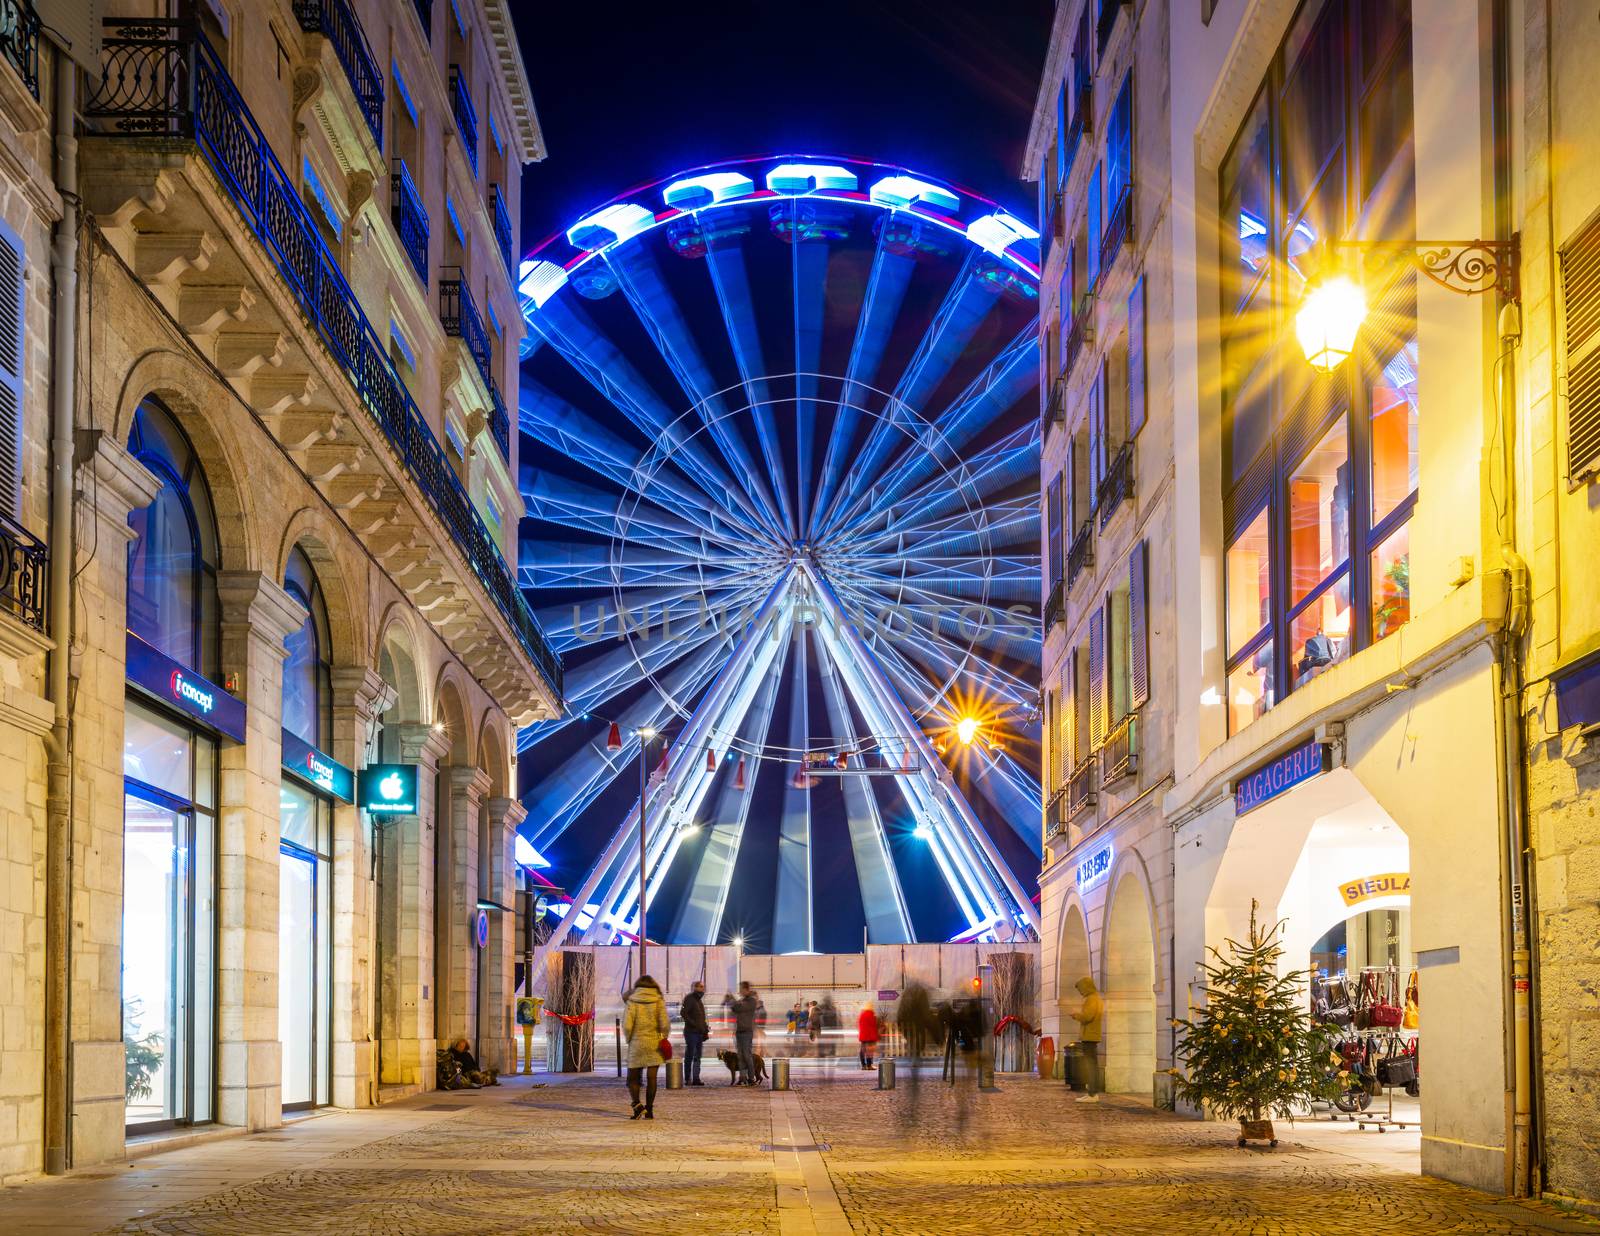 The ferris wheel at night in Bayonne, France by dutourdumonde